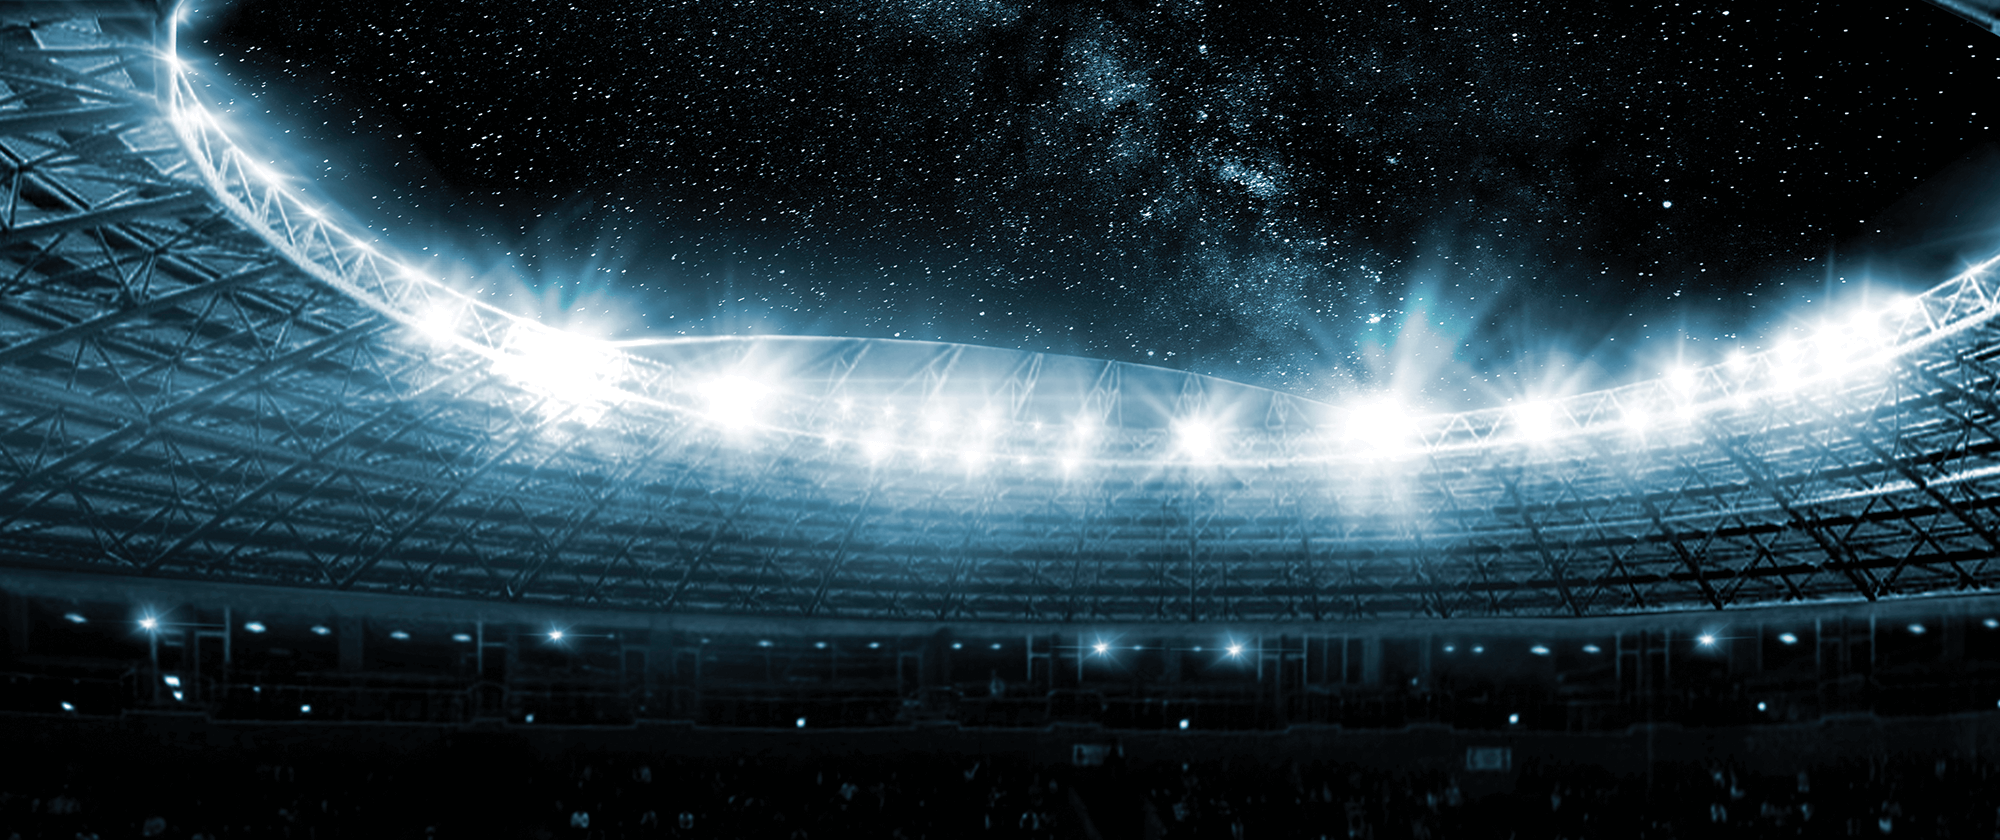 Footy Stadium at night